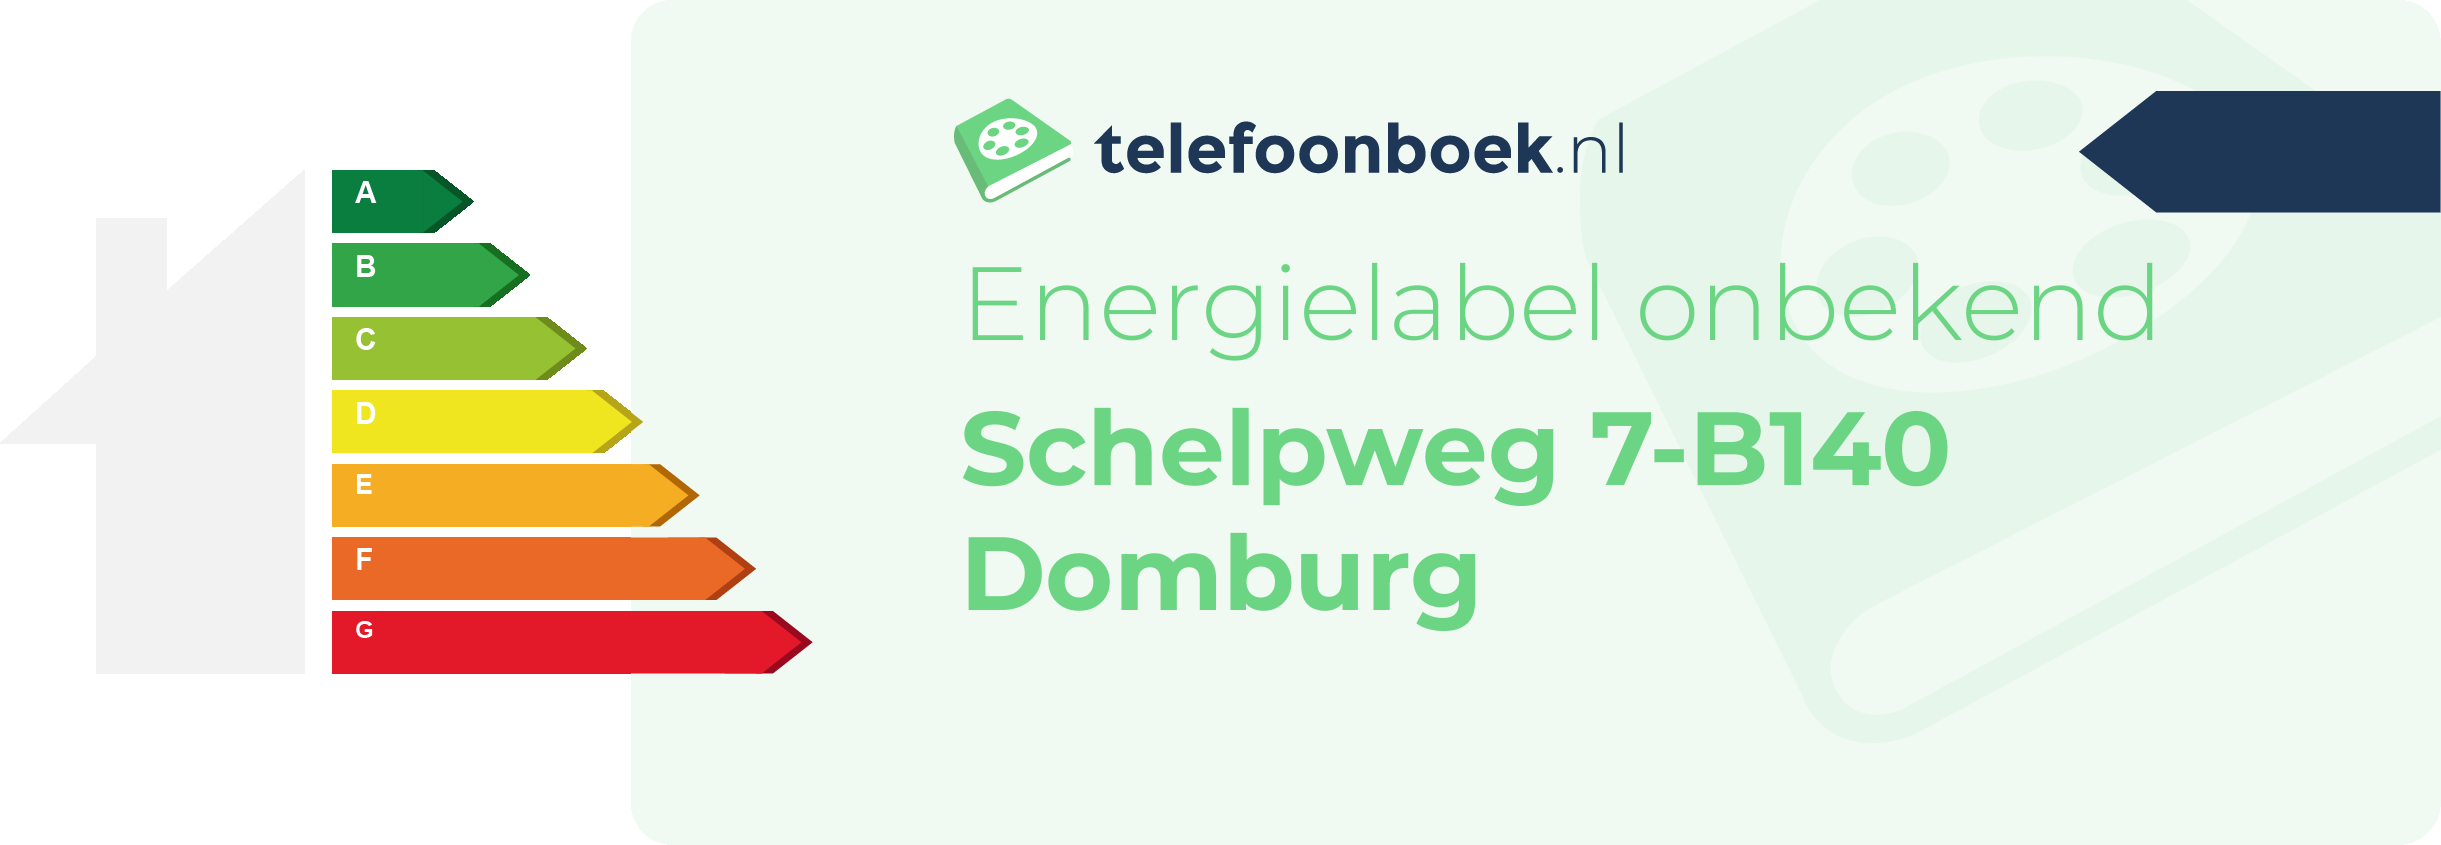 Energielabel Schelpweg 7-B140 Domburg